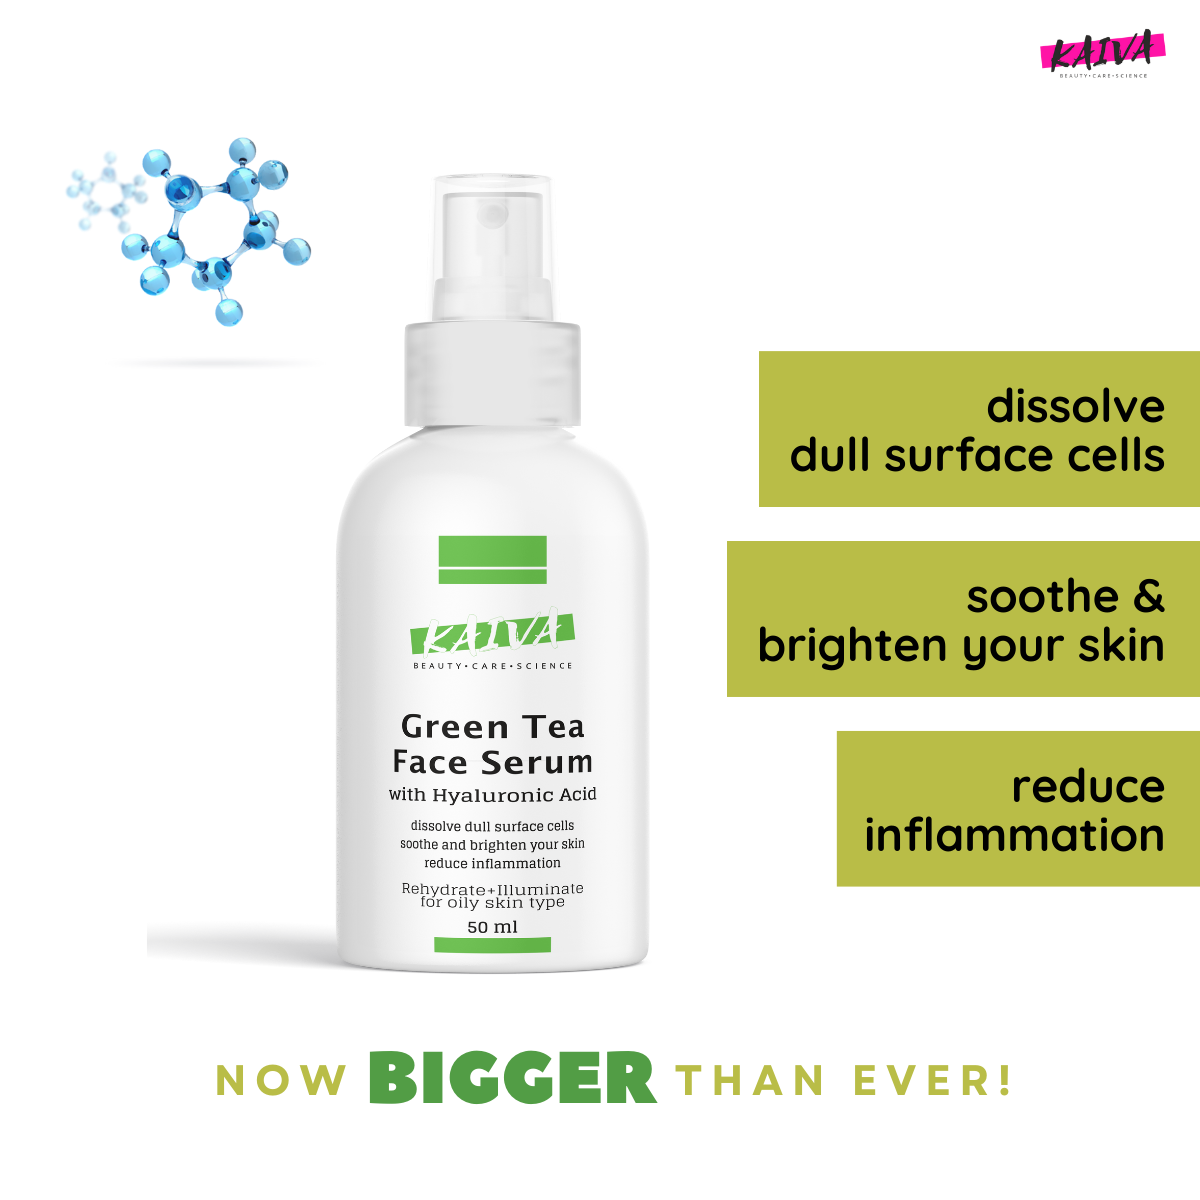 Green Tea Face Serum - Clears Pores, Acne, Reduces Pore Size - 50 ml